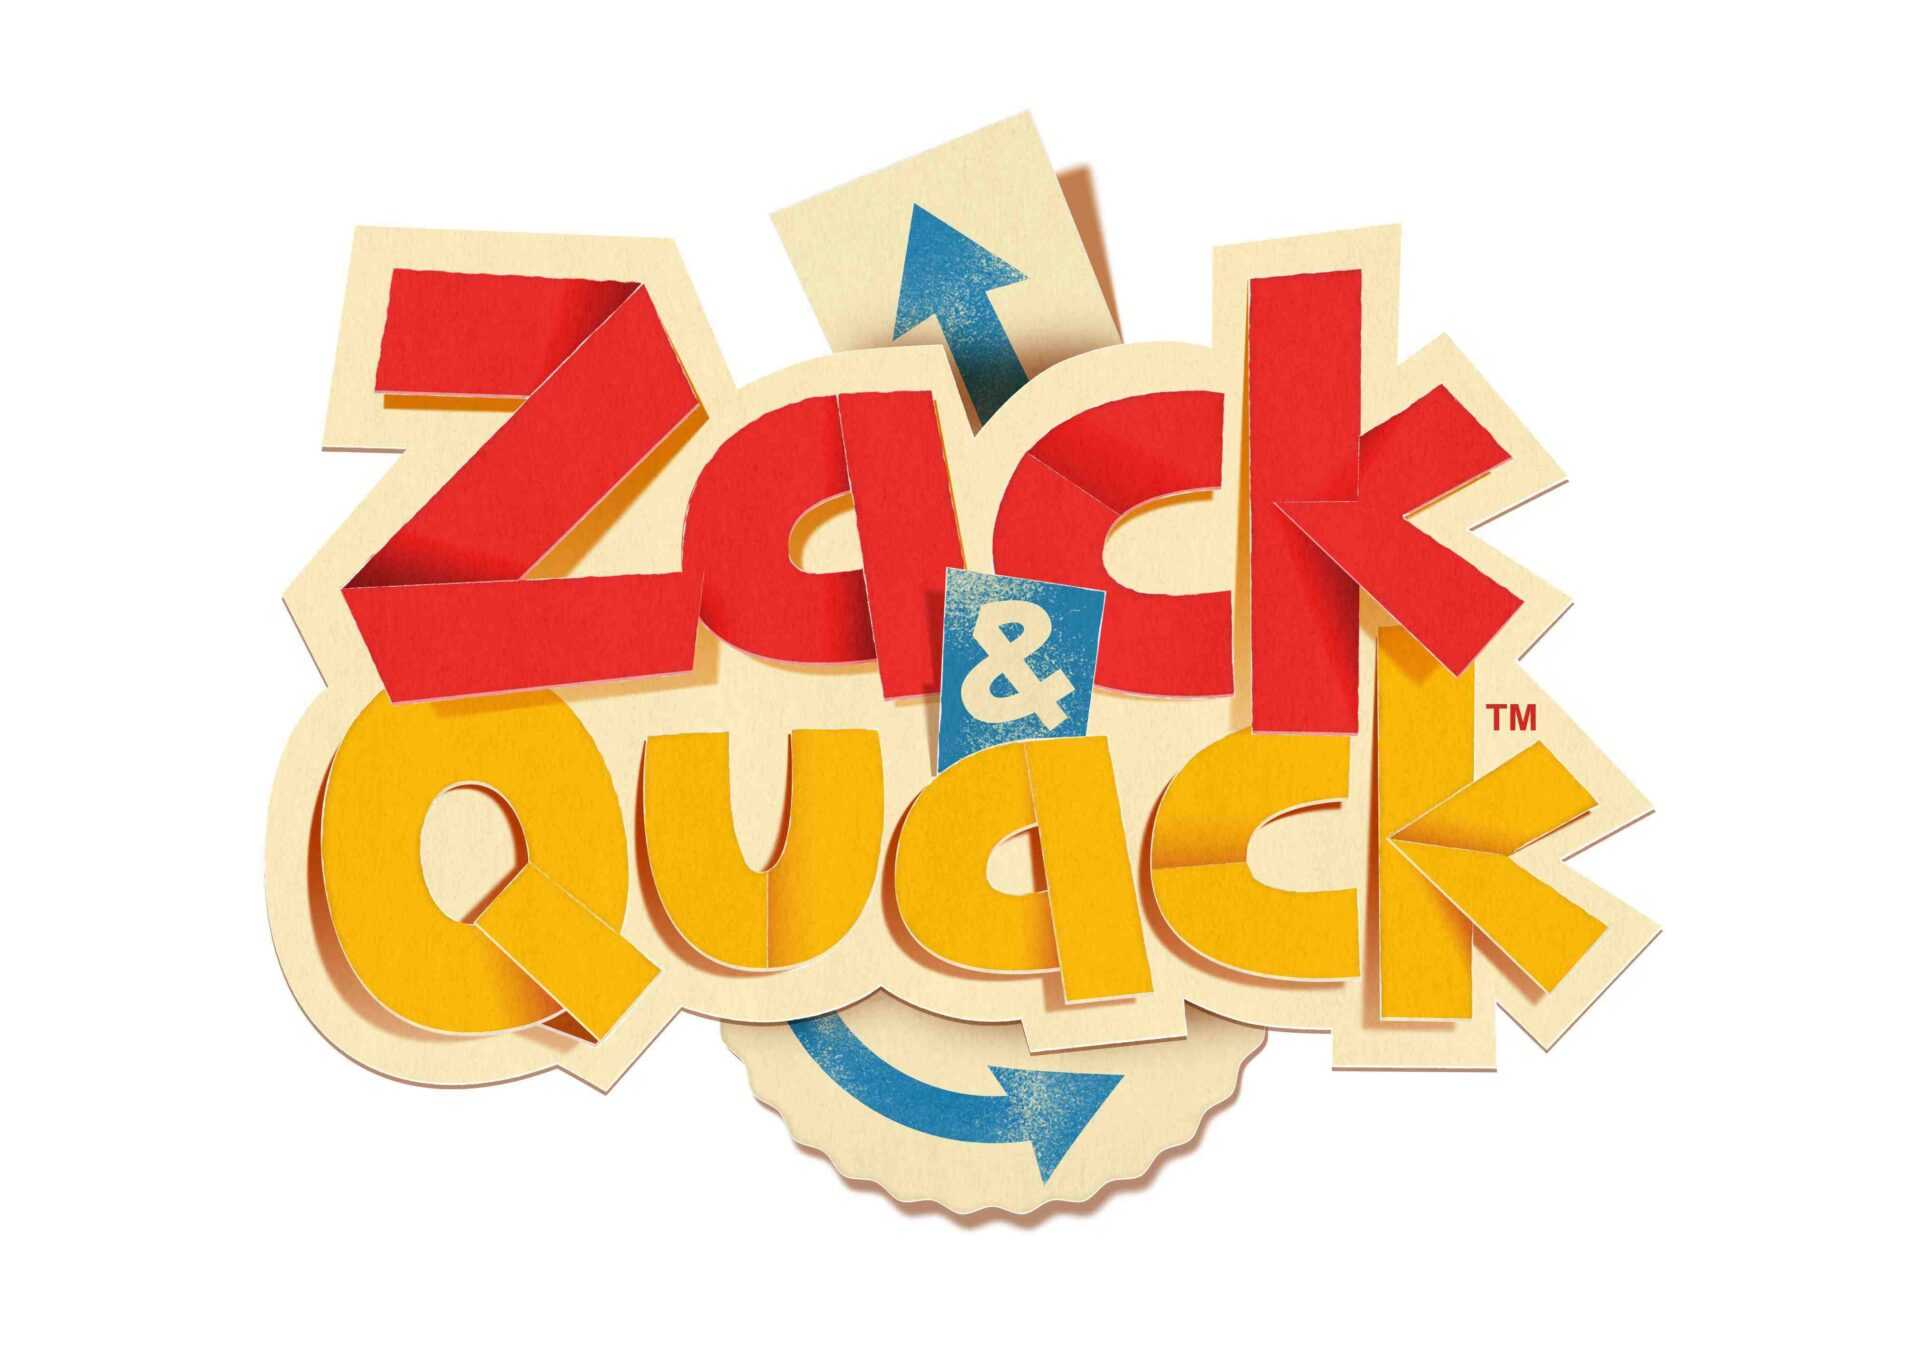 "I Thunderman" & "Zack & Quack" dal 7 Aprile su Nickelodeon | Digitale terrestre: Dtti.it